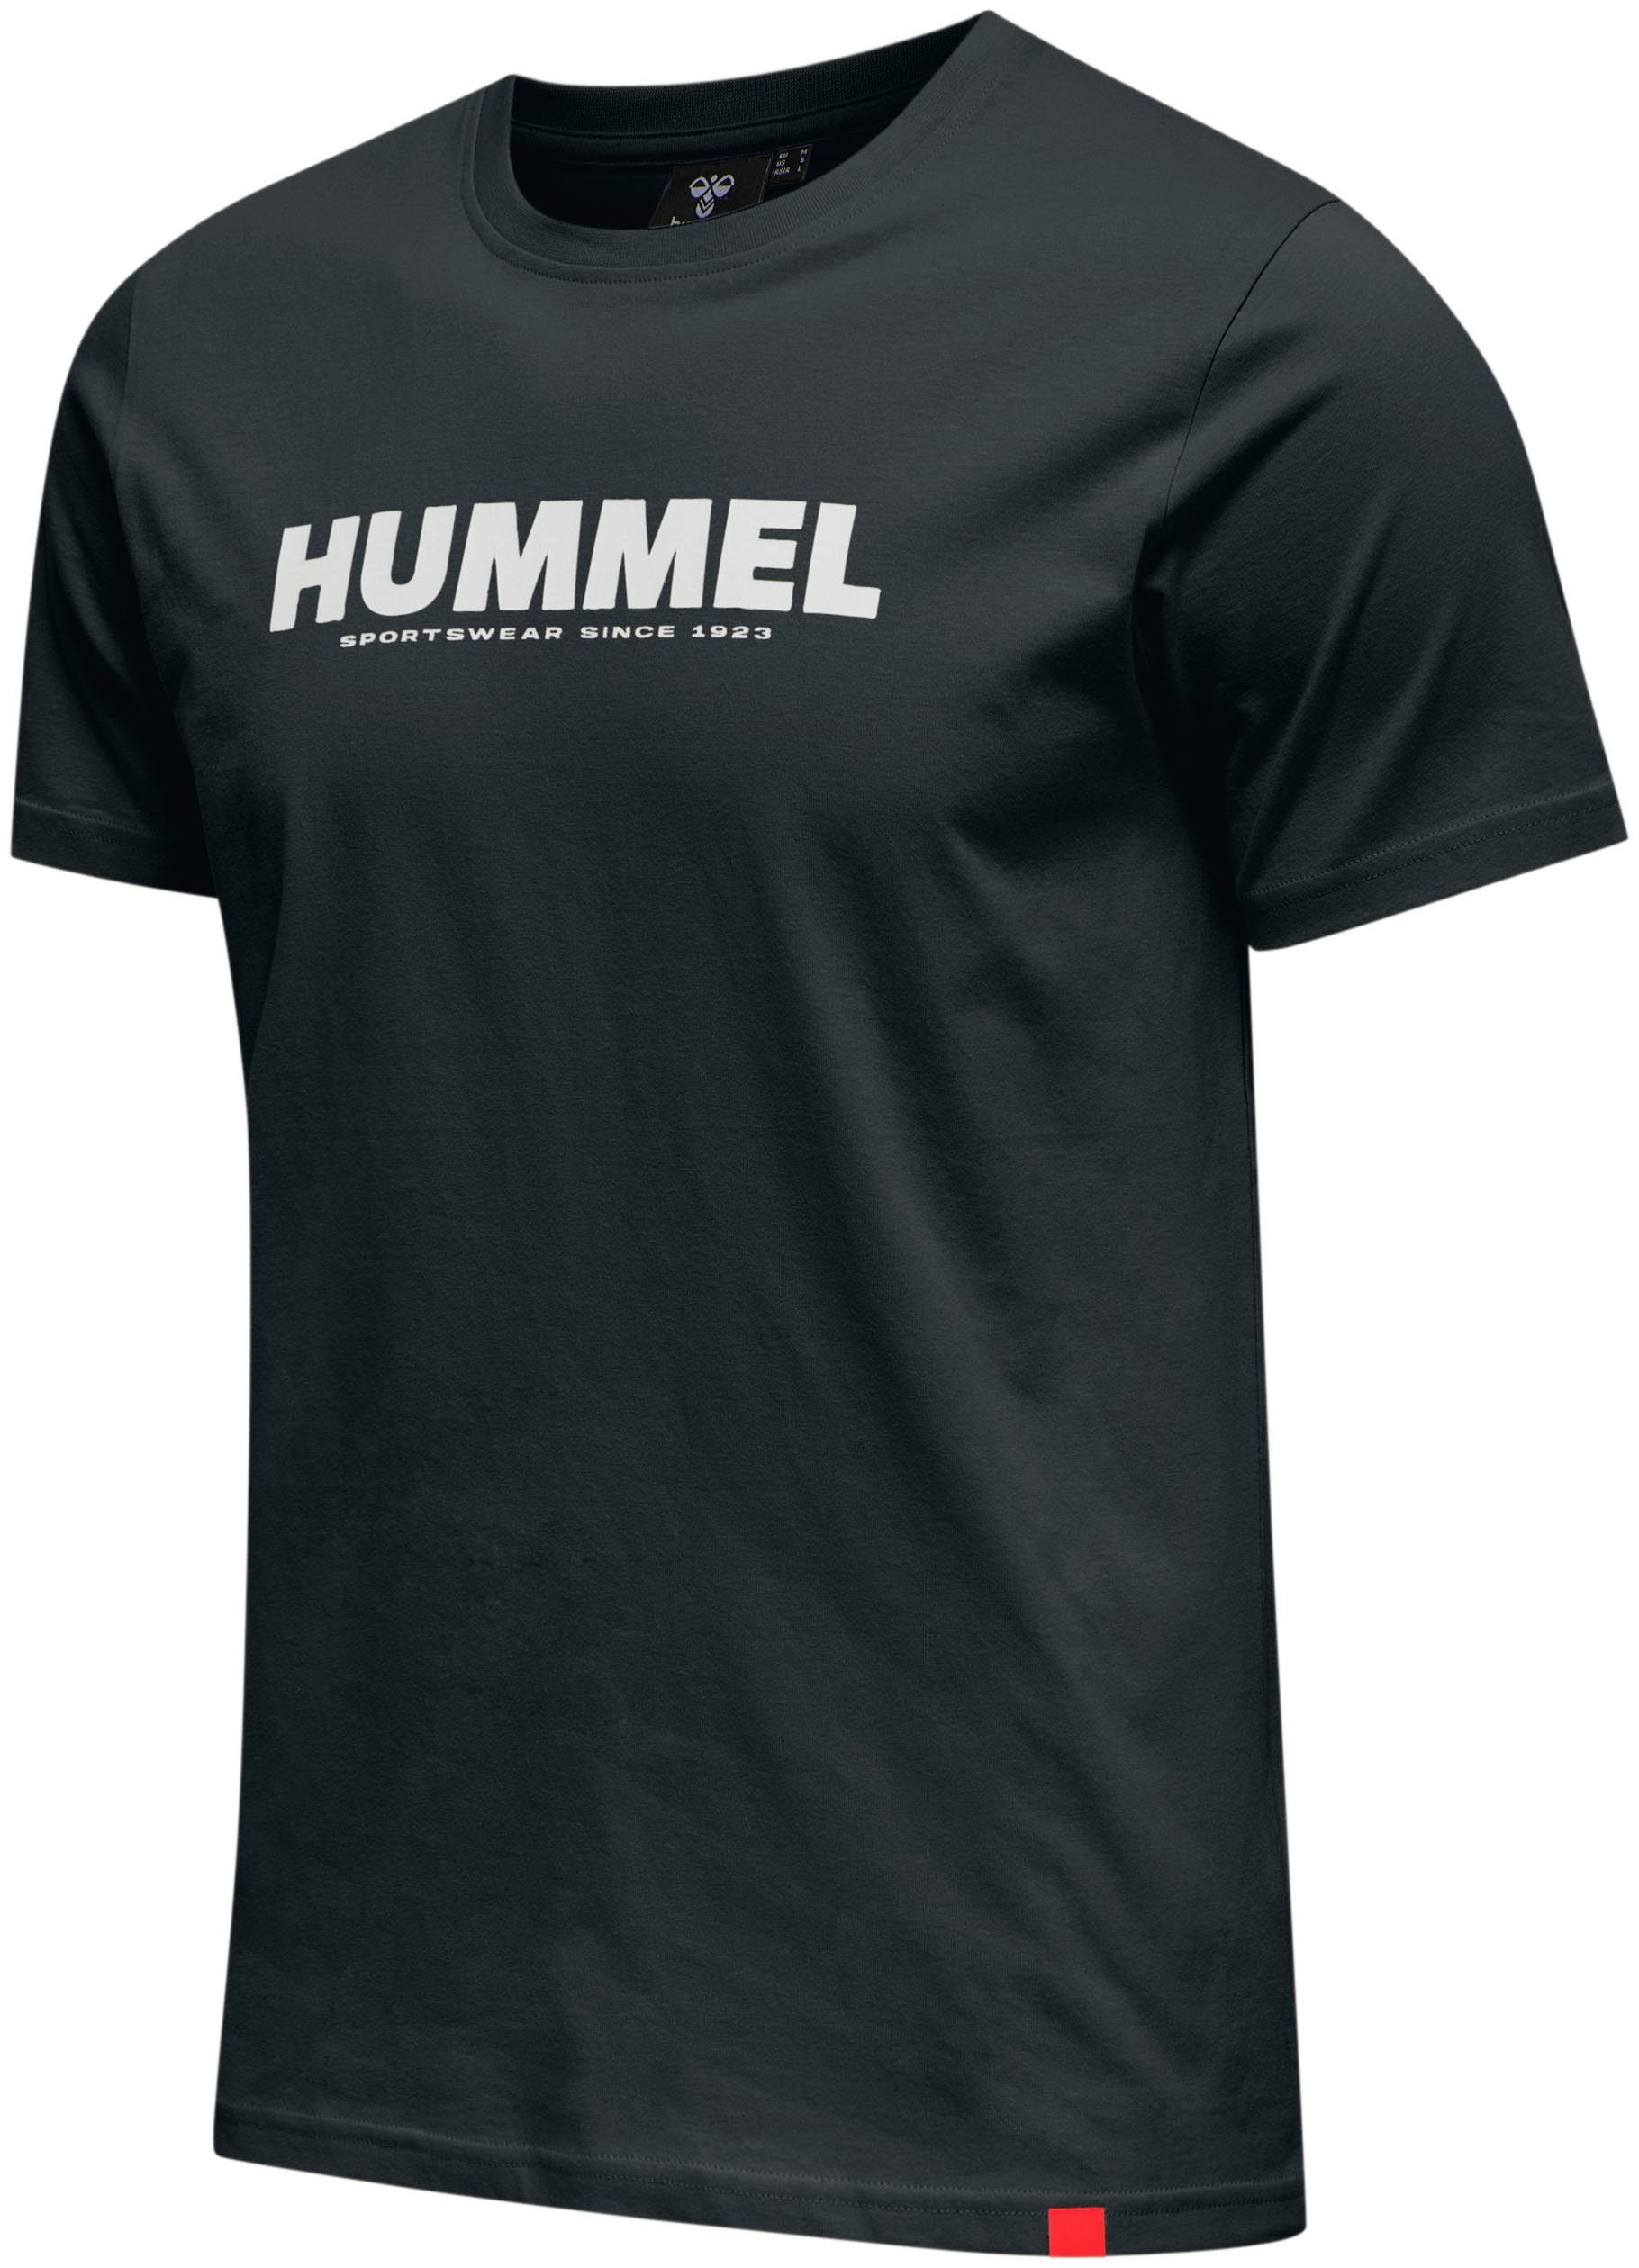 hummel Print Logo T-Shirt mit schwarz